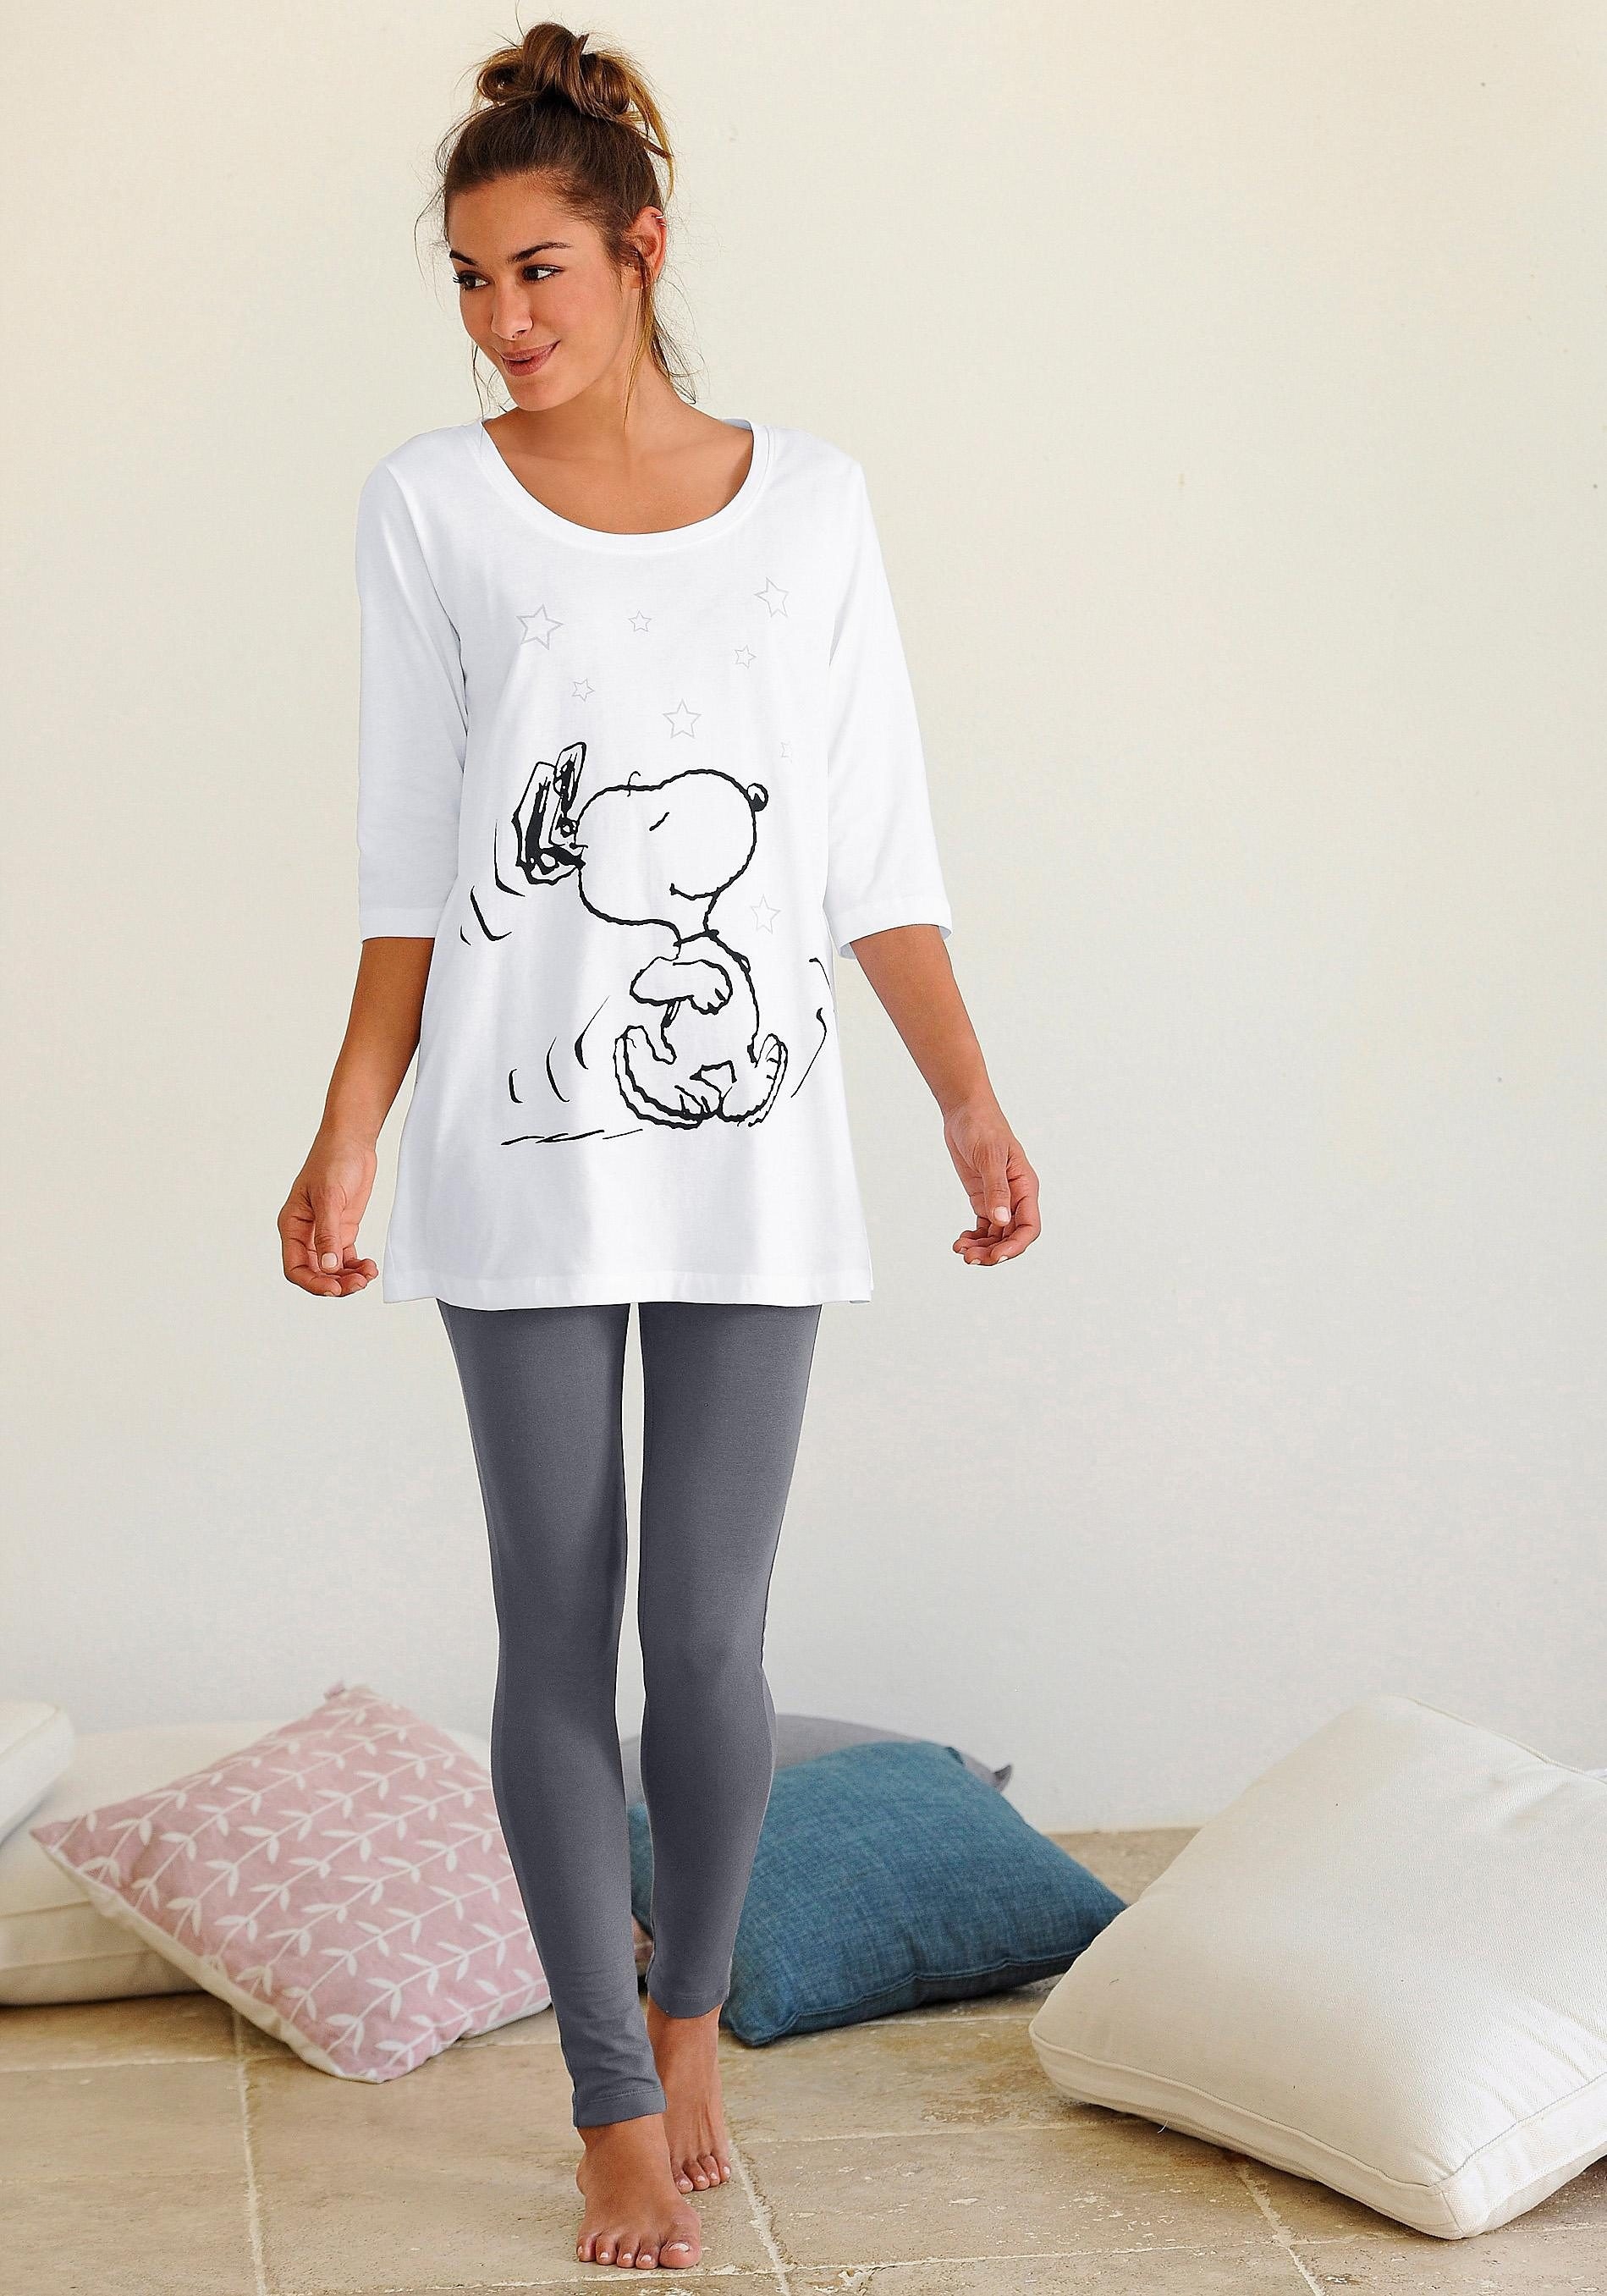 Damen Pyjama mit Snoopy-Motiv